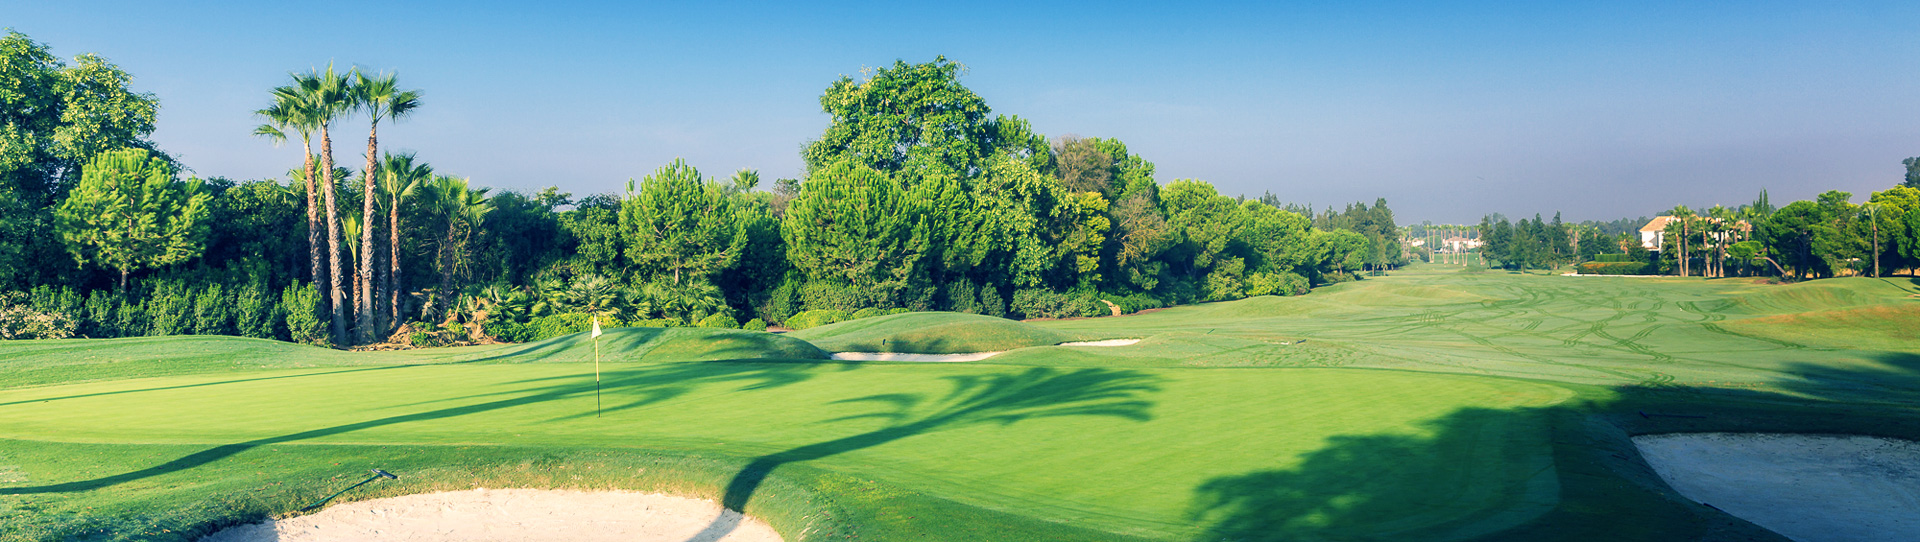 Spain golf courses - Real Club de Sevilla - Photo 2